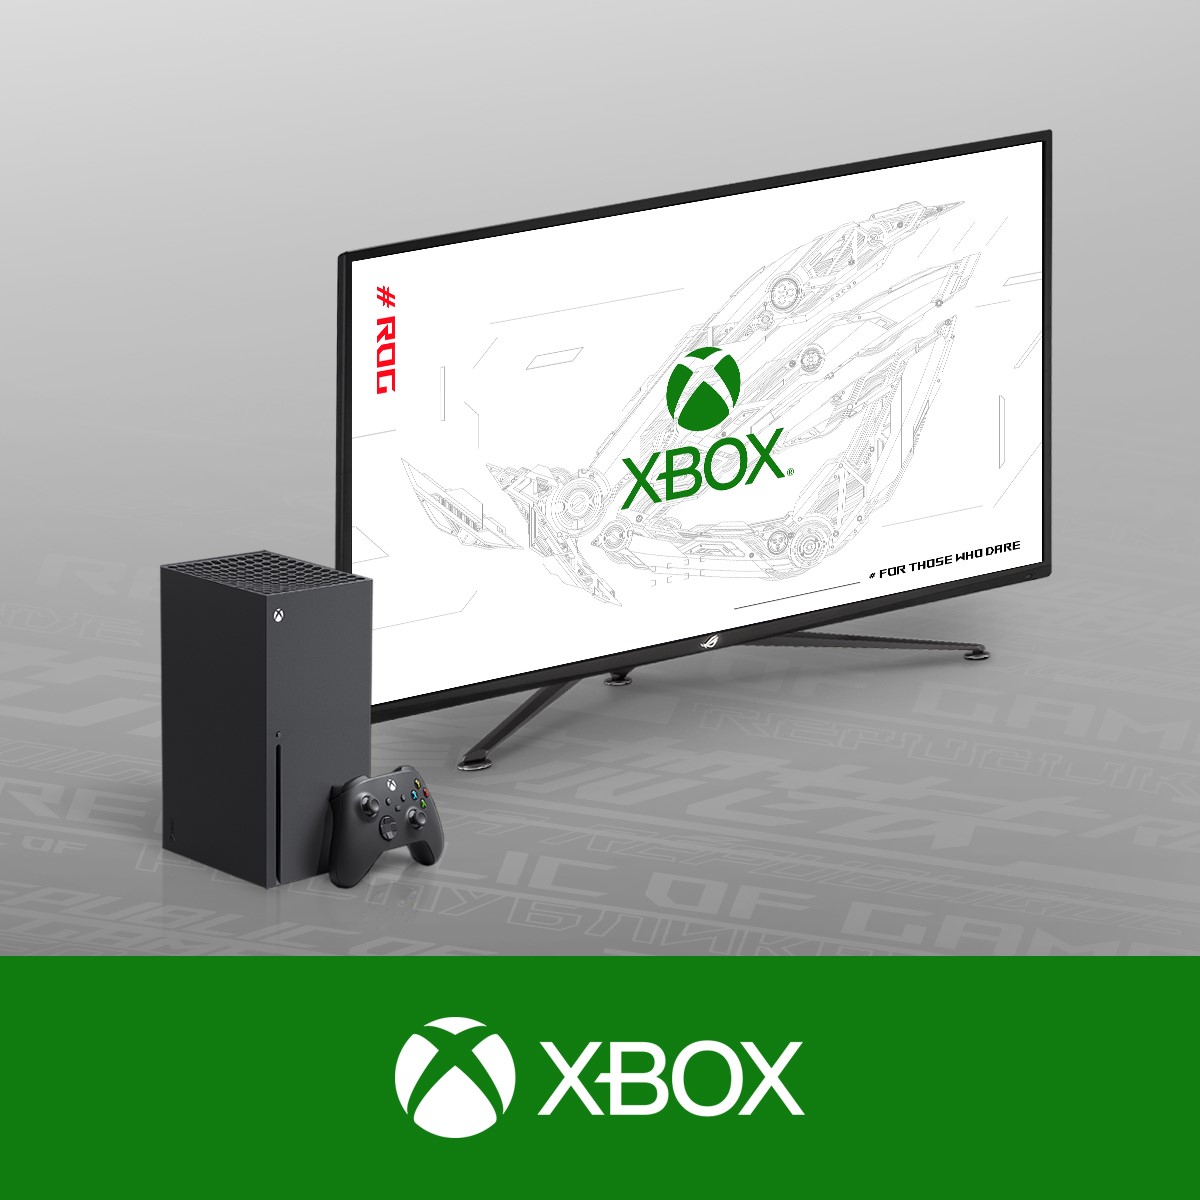 ASUS-ROG-Strix-XG43UQ-Xbox-Edition-1.jpg